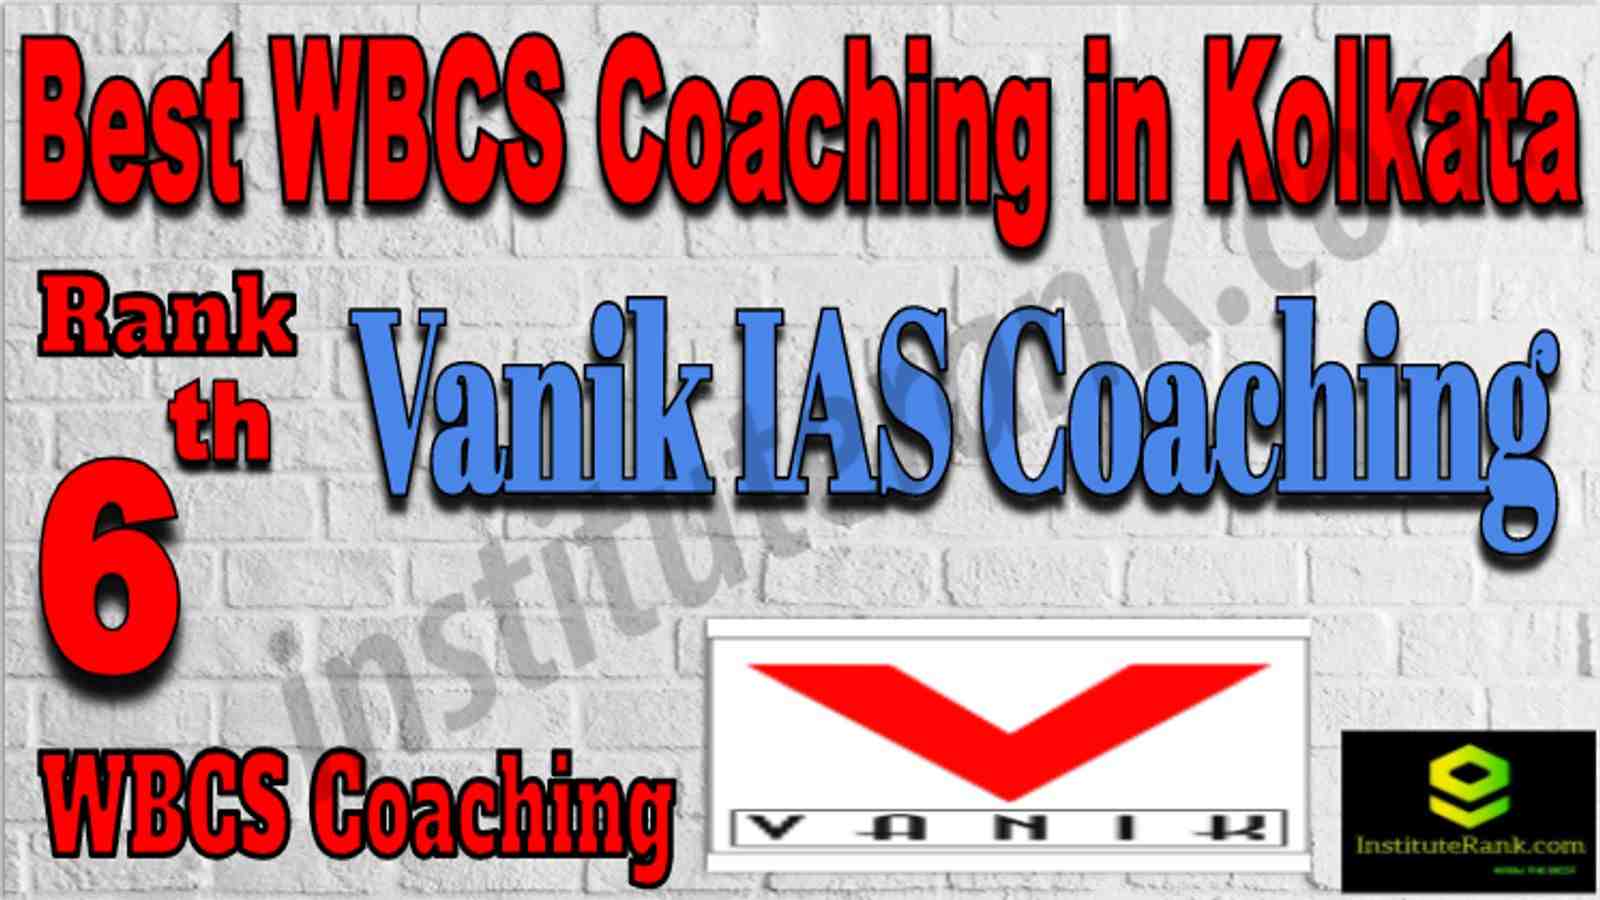 Rank 6 Best WBCS Coaching in Kolkata